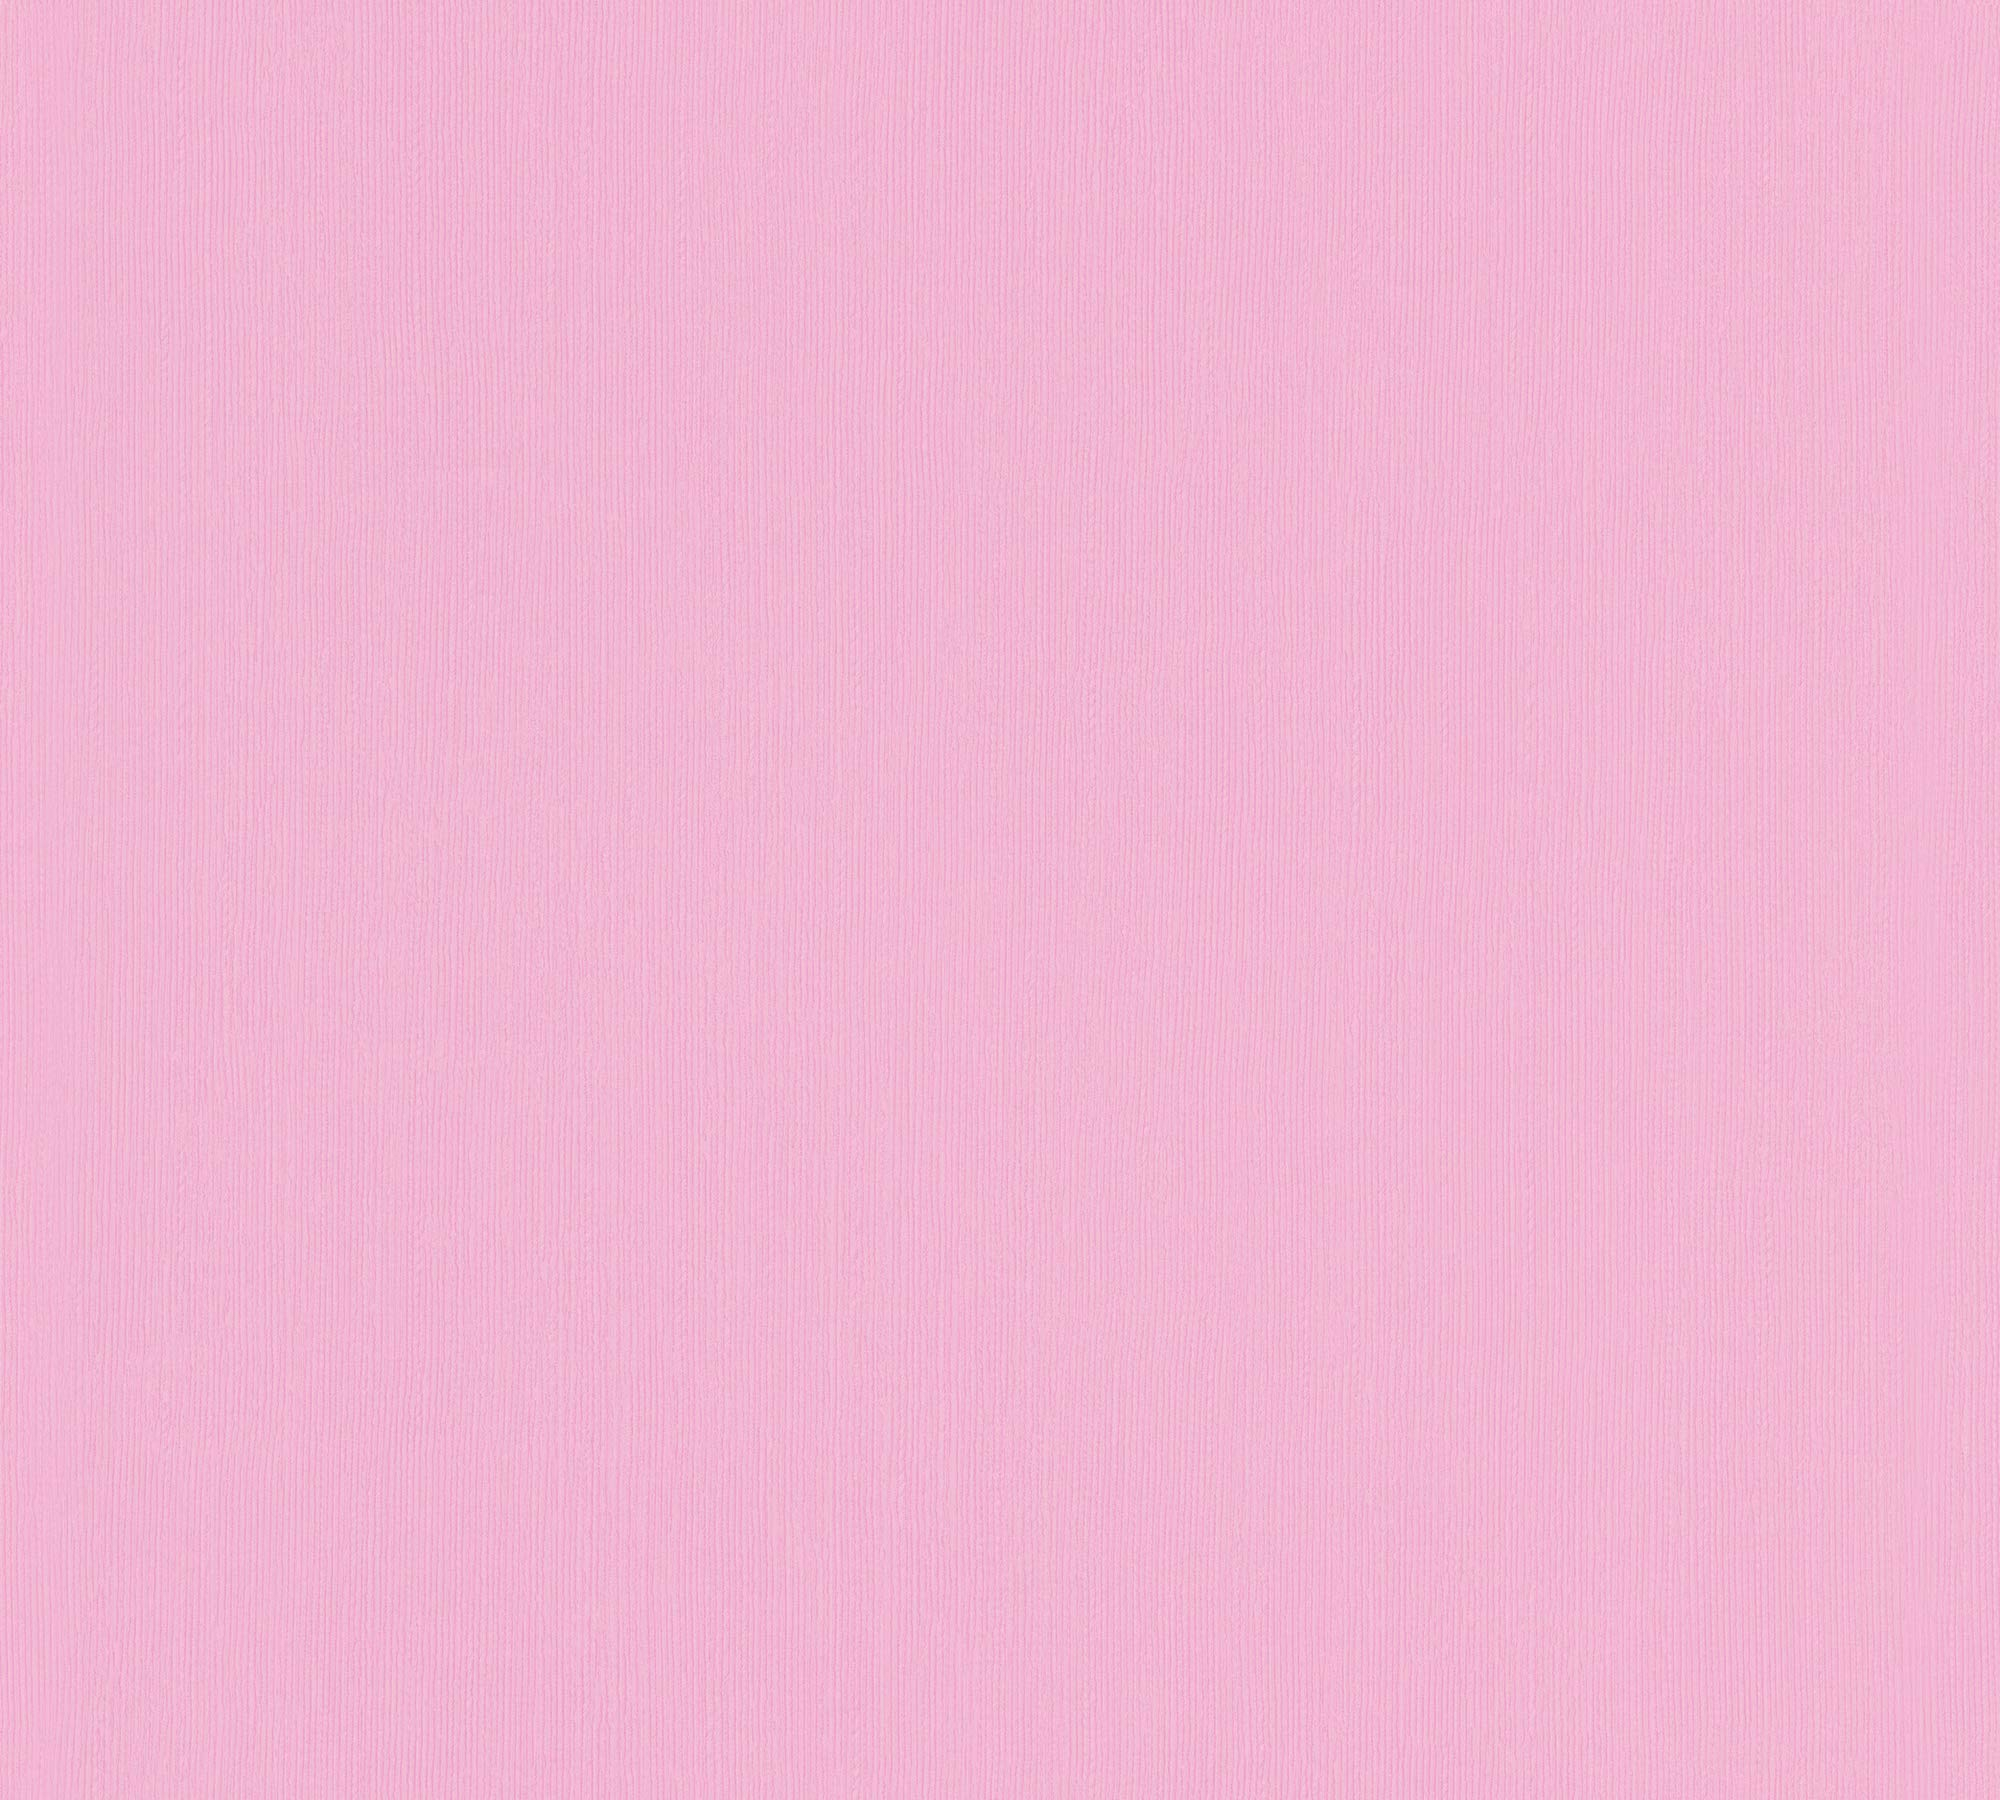 2000x1800 Creation Boys and Girls 4 898111 Wallpaper Plain Pink